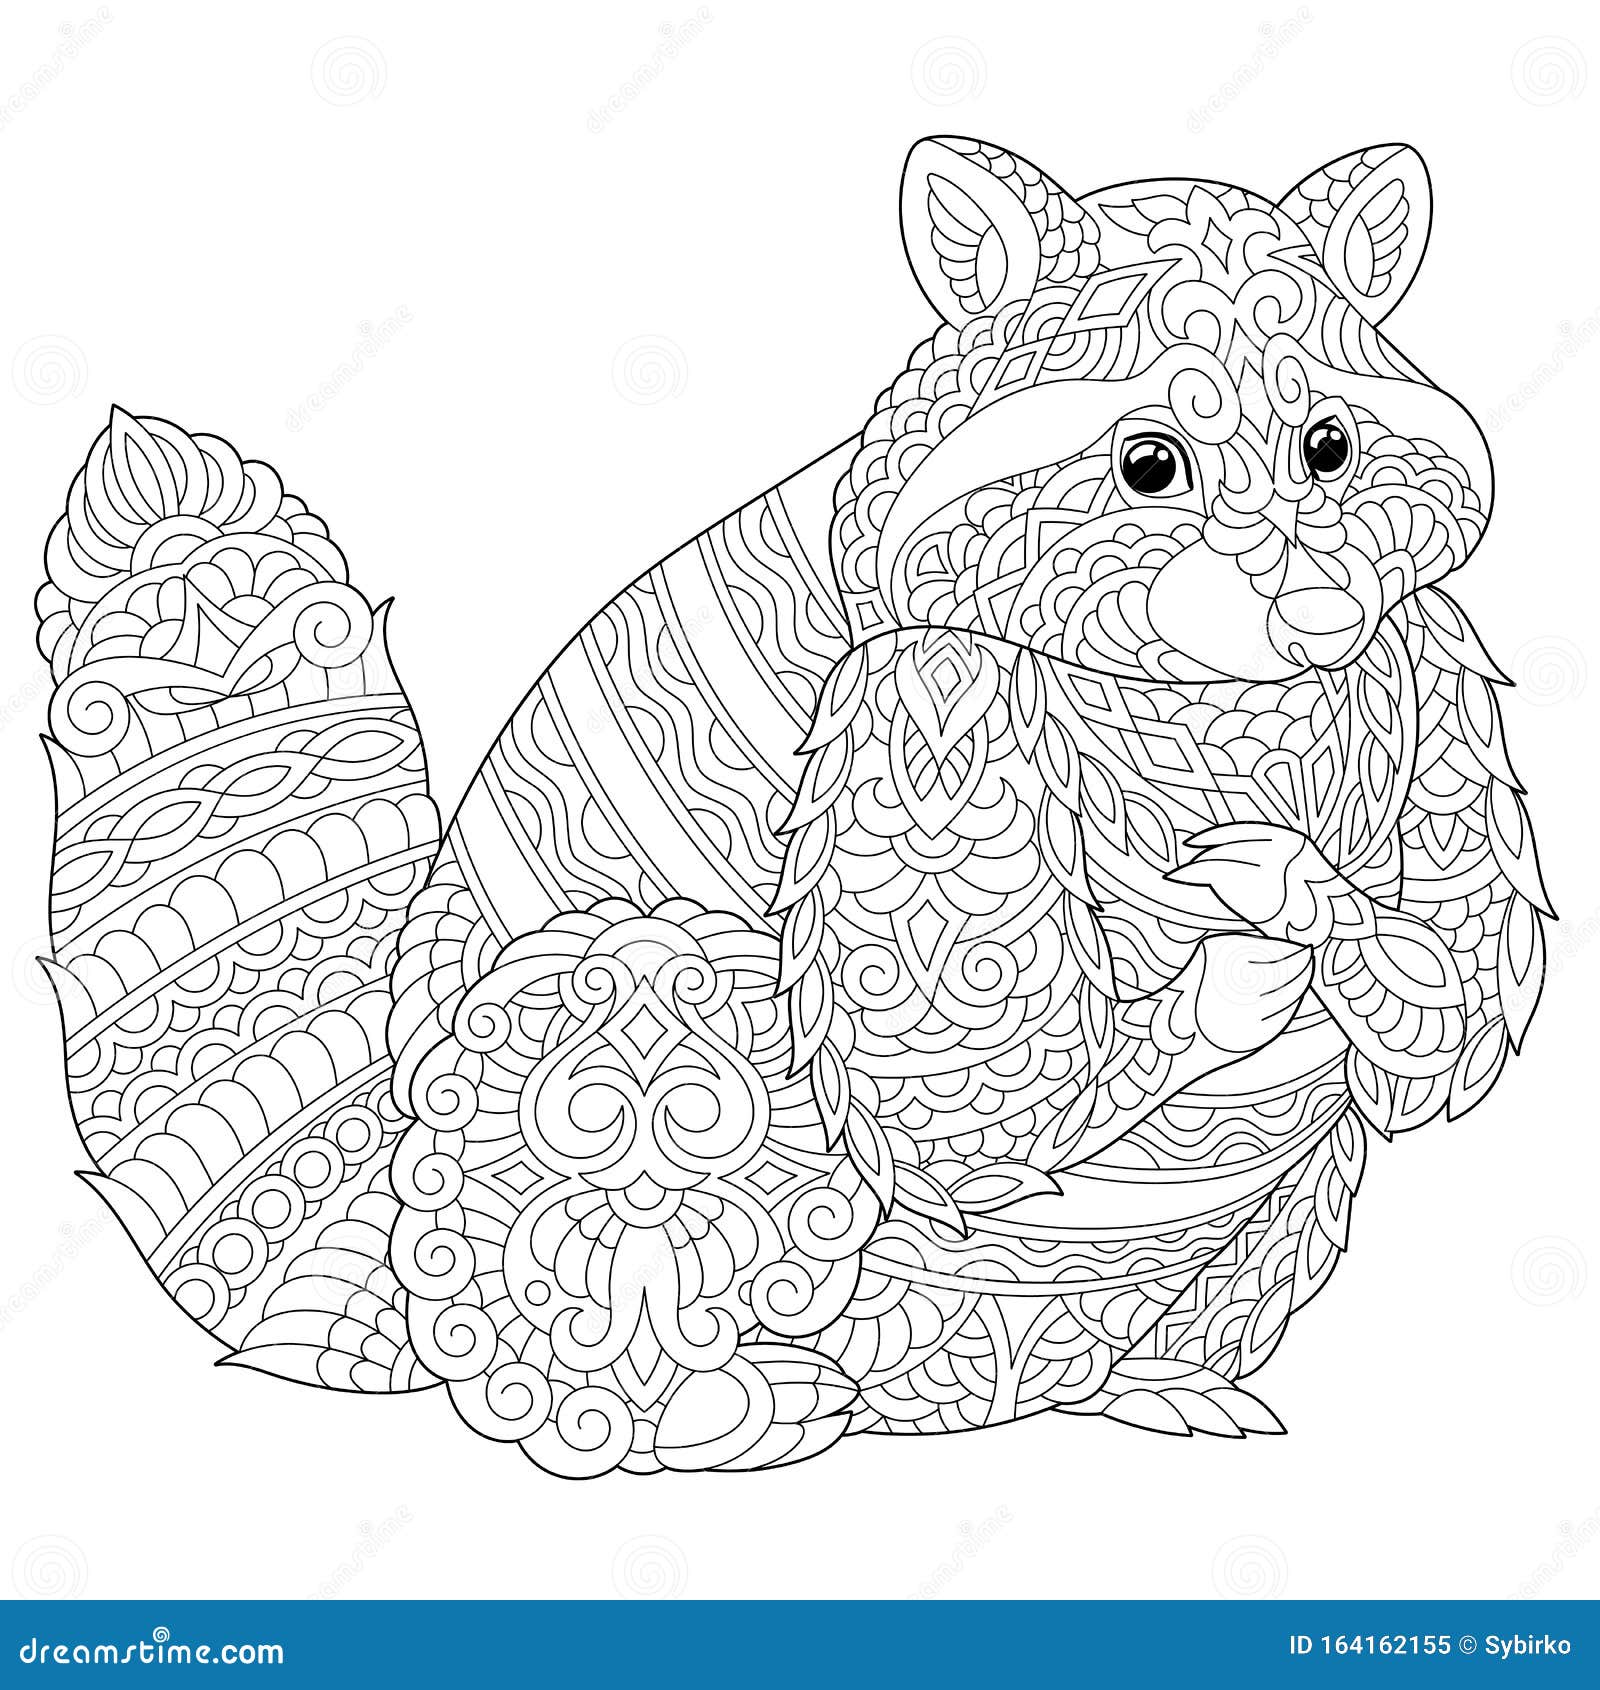 Zentangle raccoon coloring page stock vector